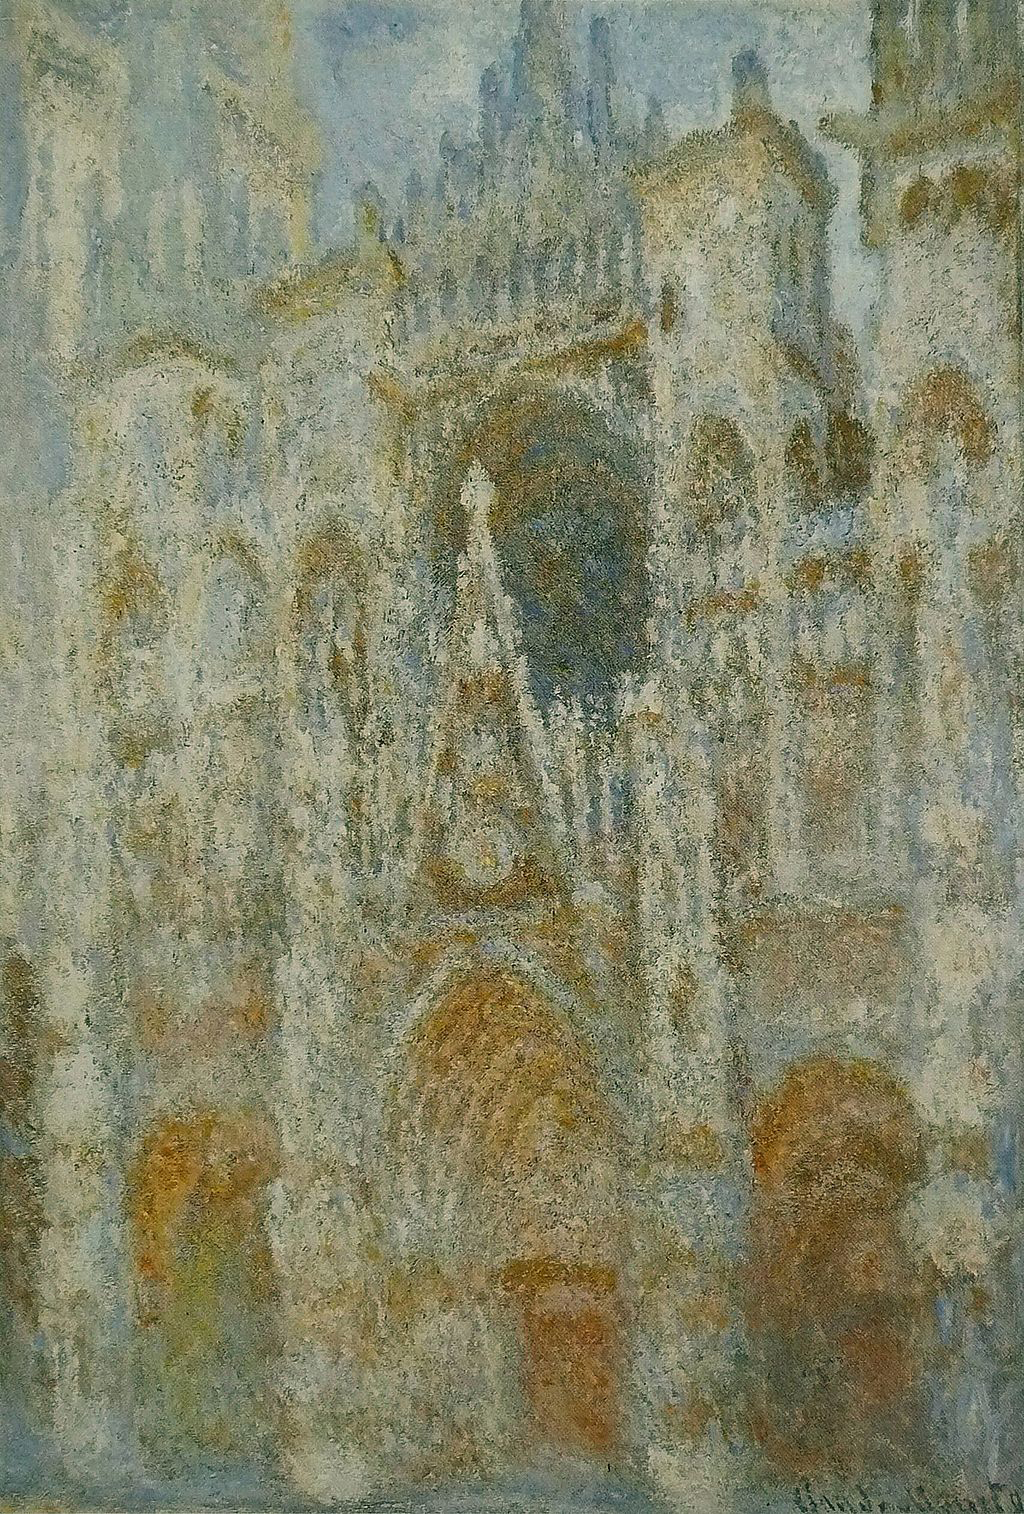 Rouen Cathedral (Morning Sun) in Detail Claude Monet